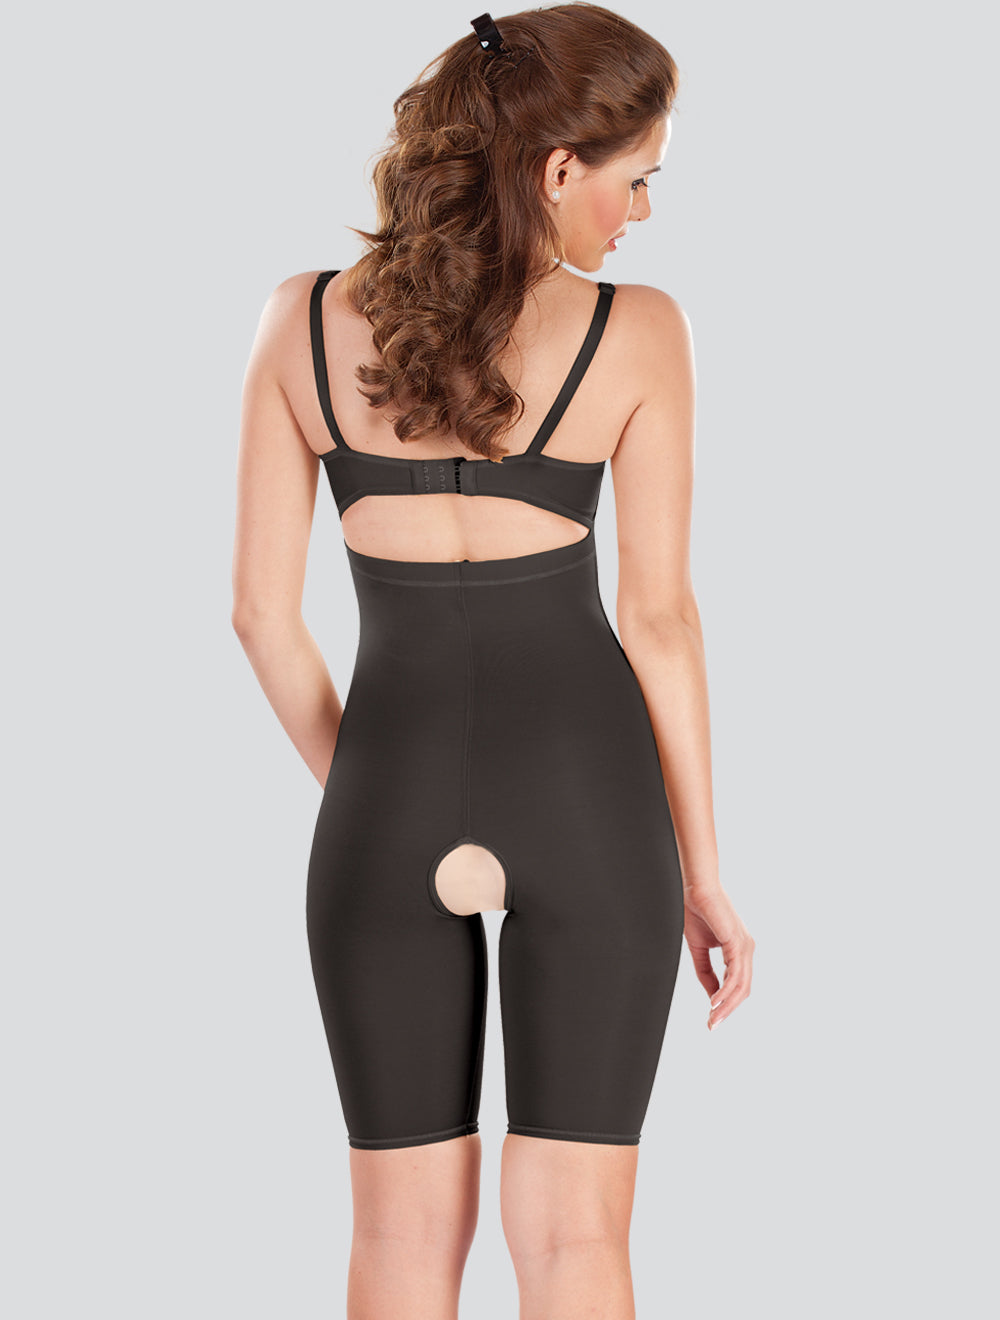 Body Shapewear Women's Binders Shapers Mesh Bodysuit Breathable Waist  Slimming Corset Underwear (Color : C, Si